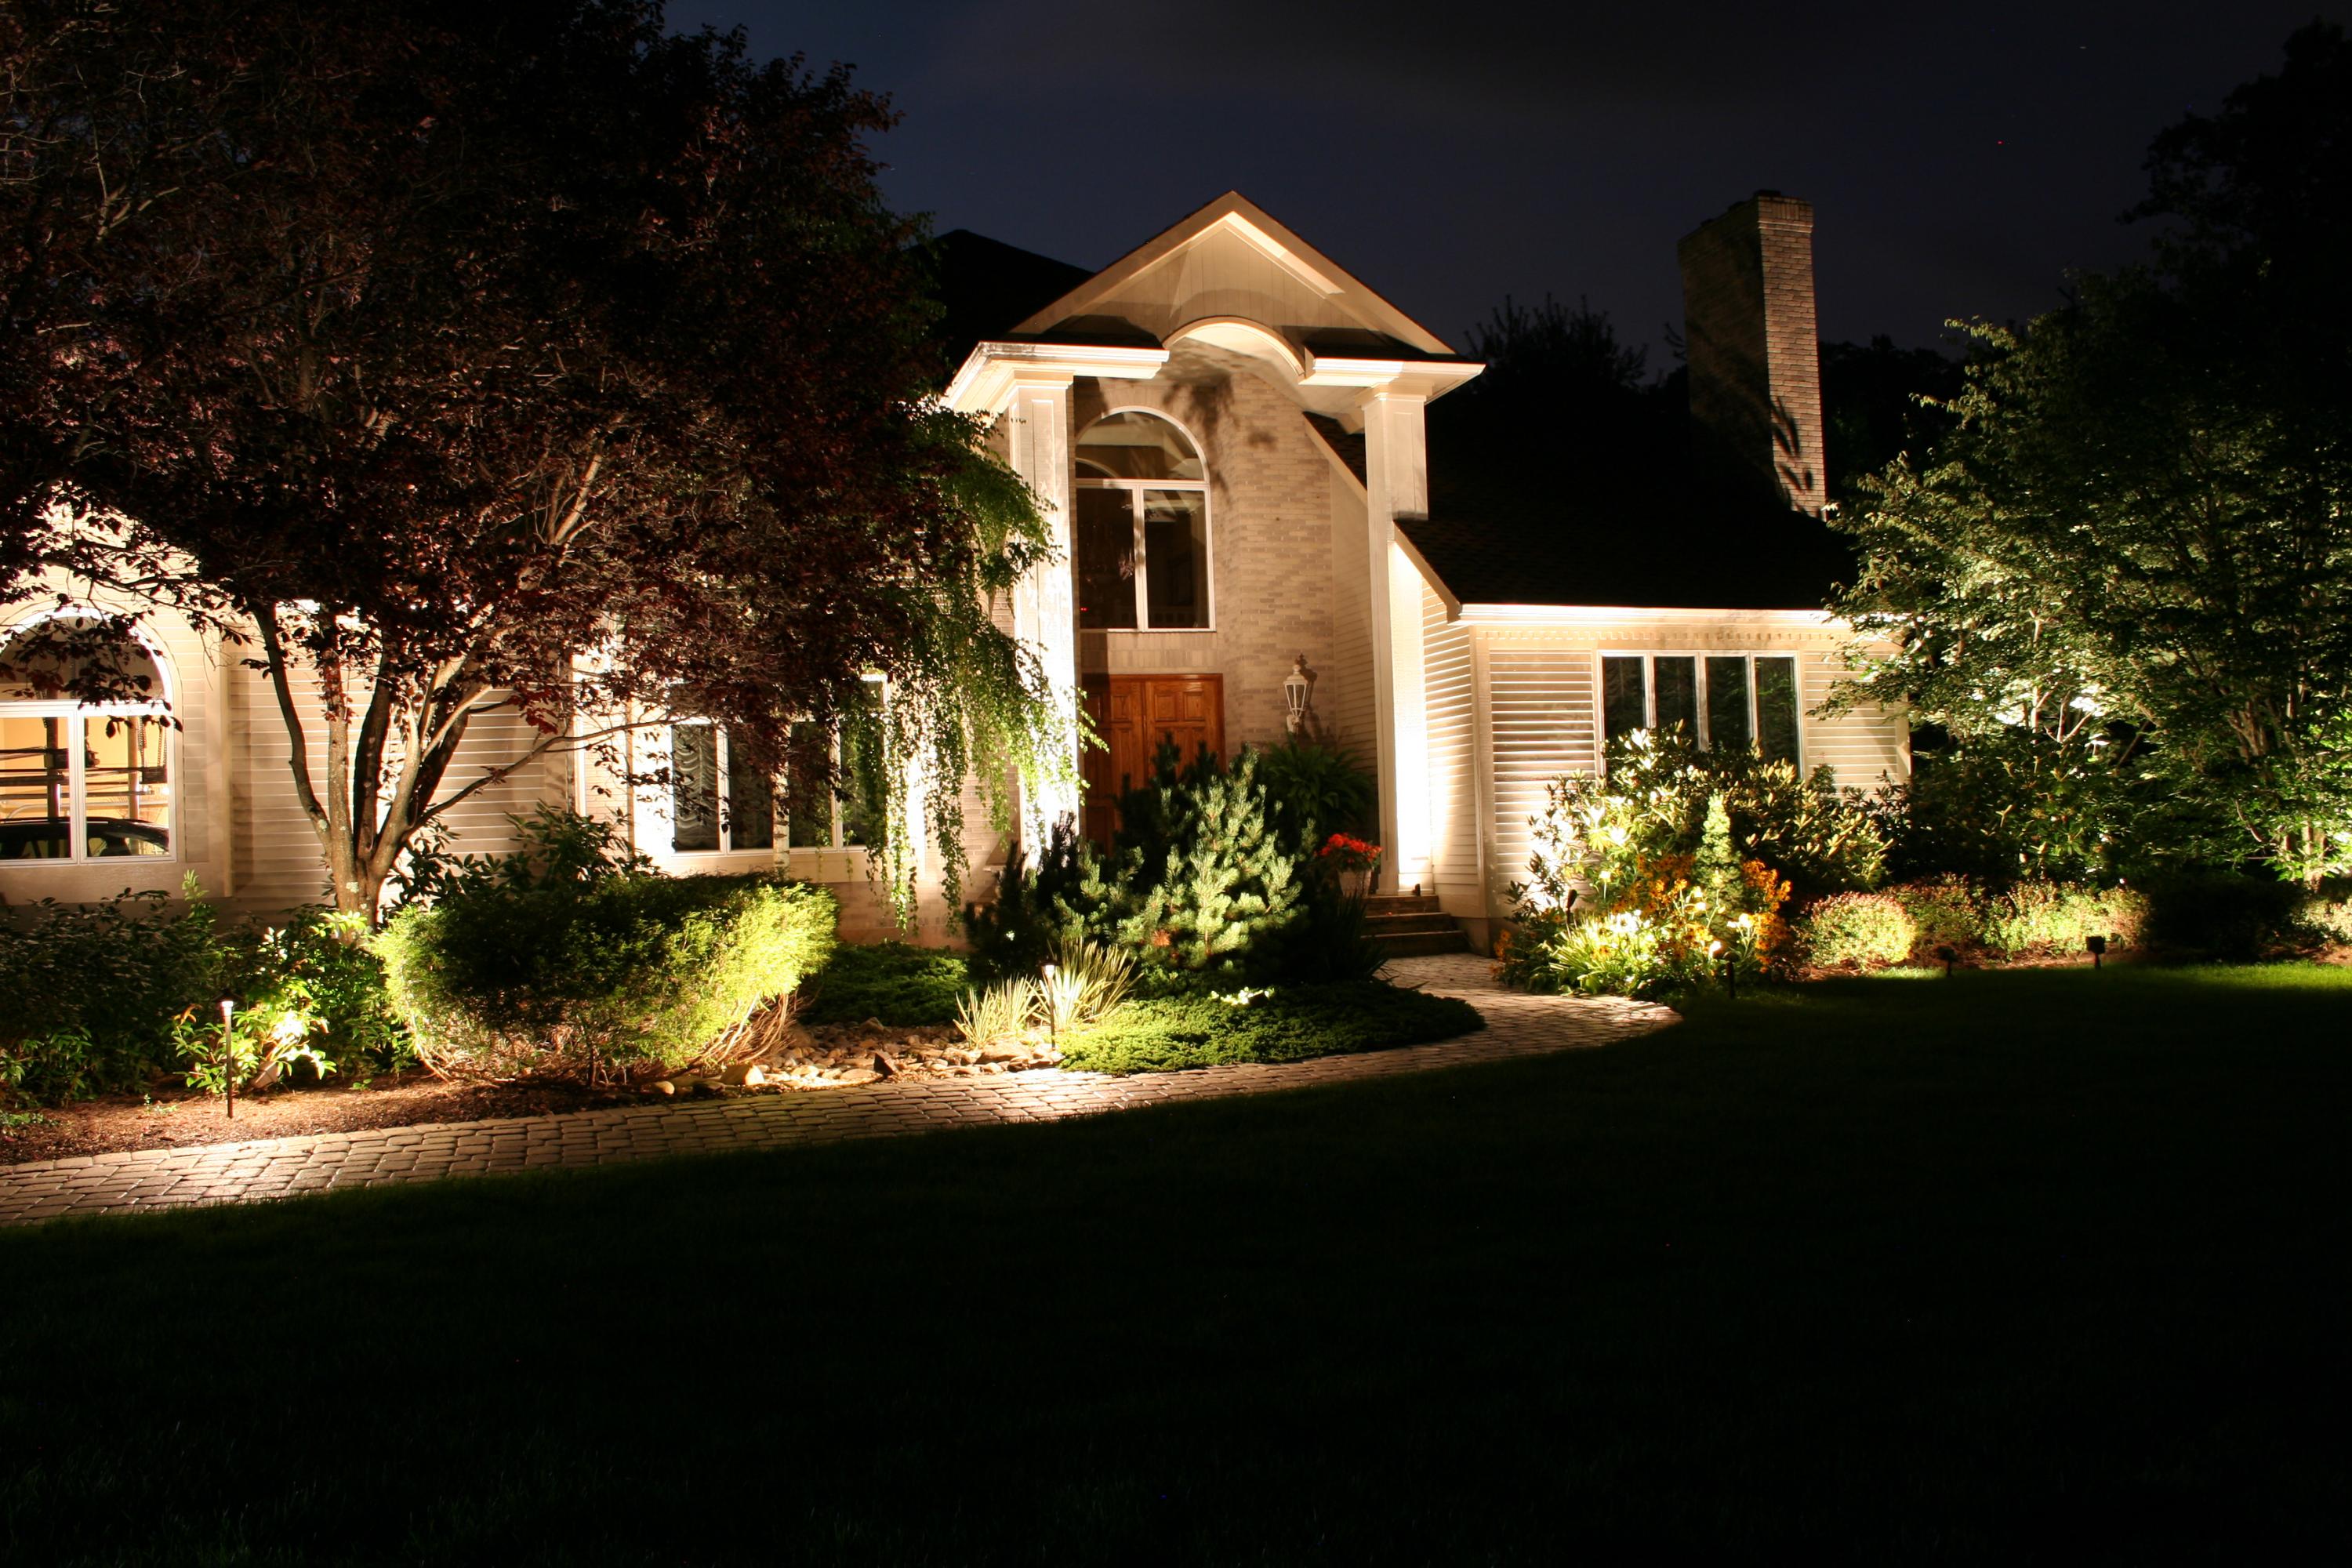 Best Garden Lighting Ideas, Tips and Tricks - Interior ...